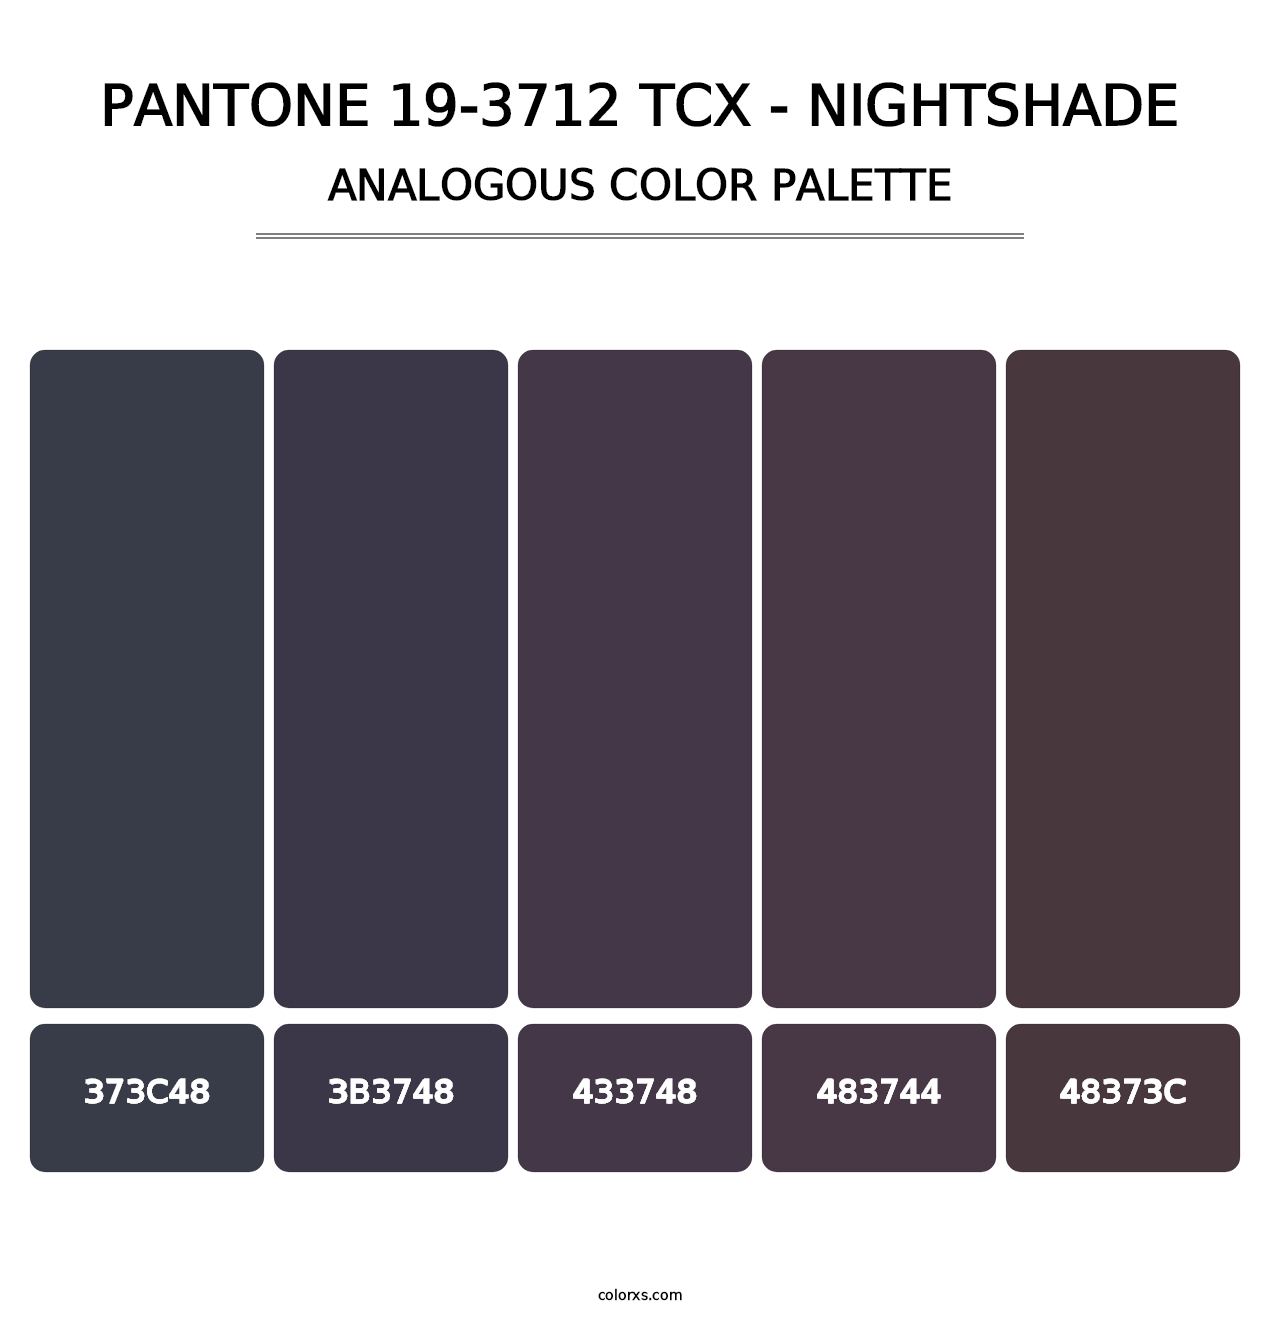 PANTONE 19-3712 TCX - Nightshade - Analogous Color Palette